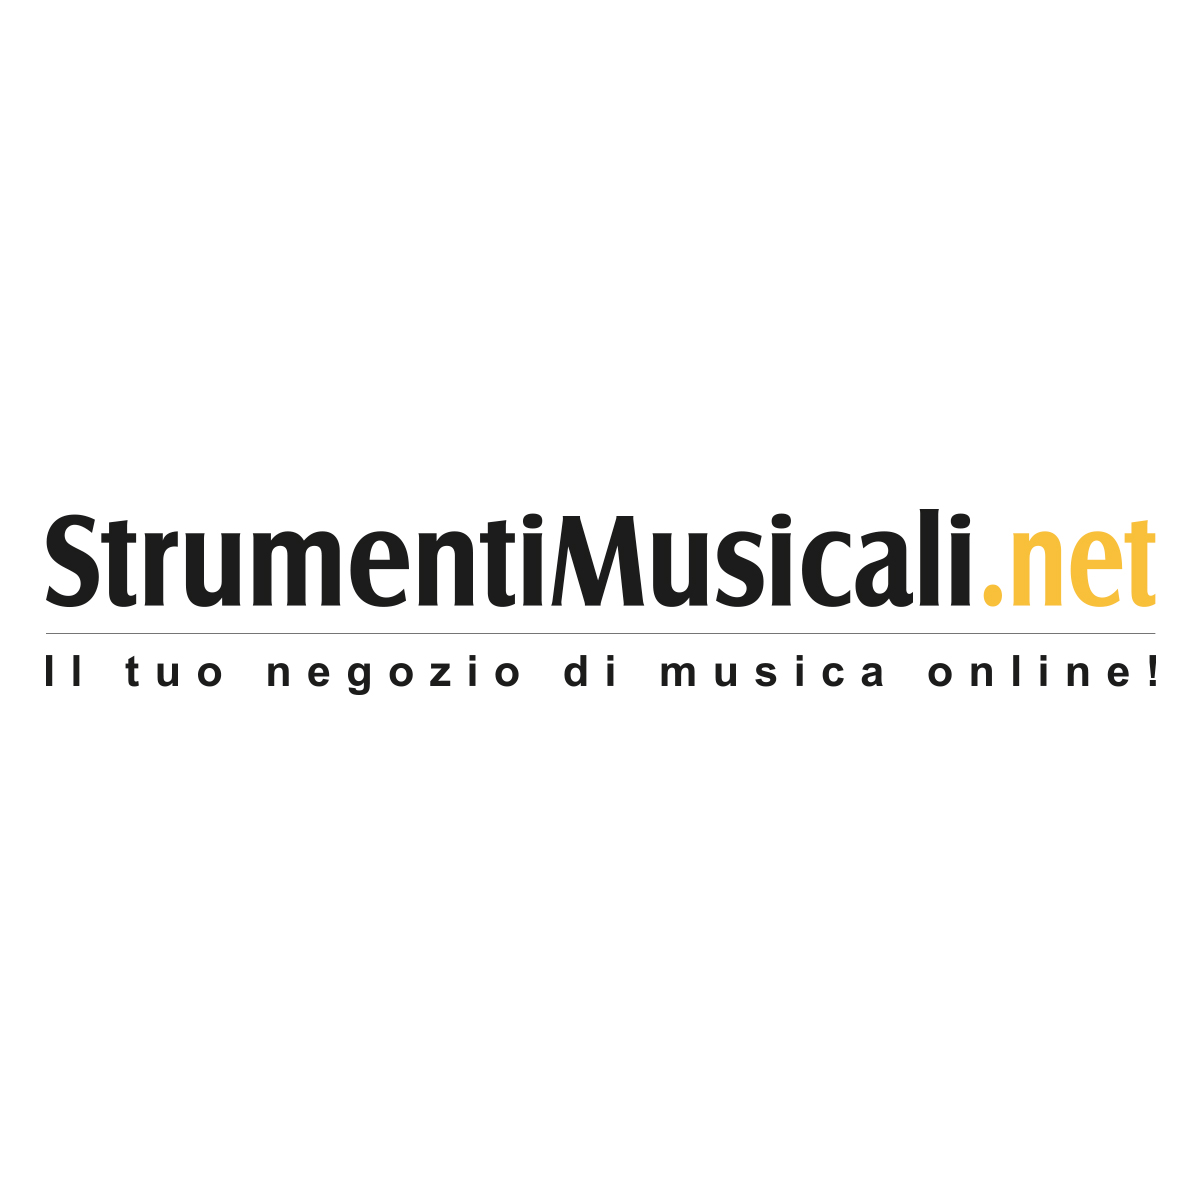 www.strumentimusicali.net